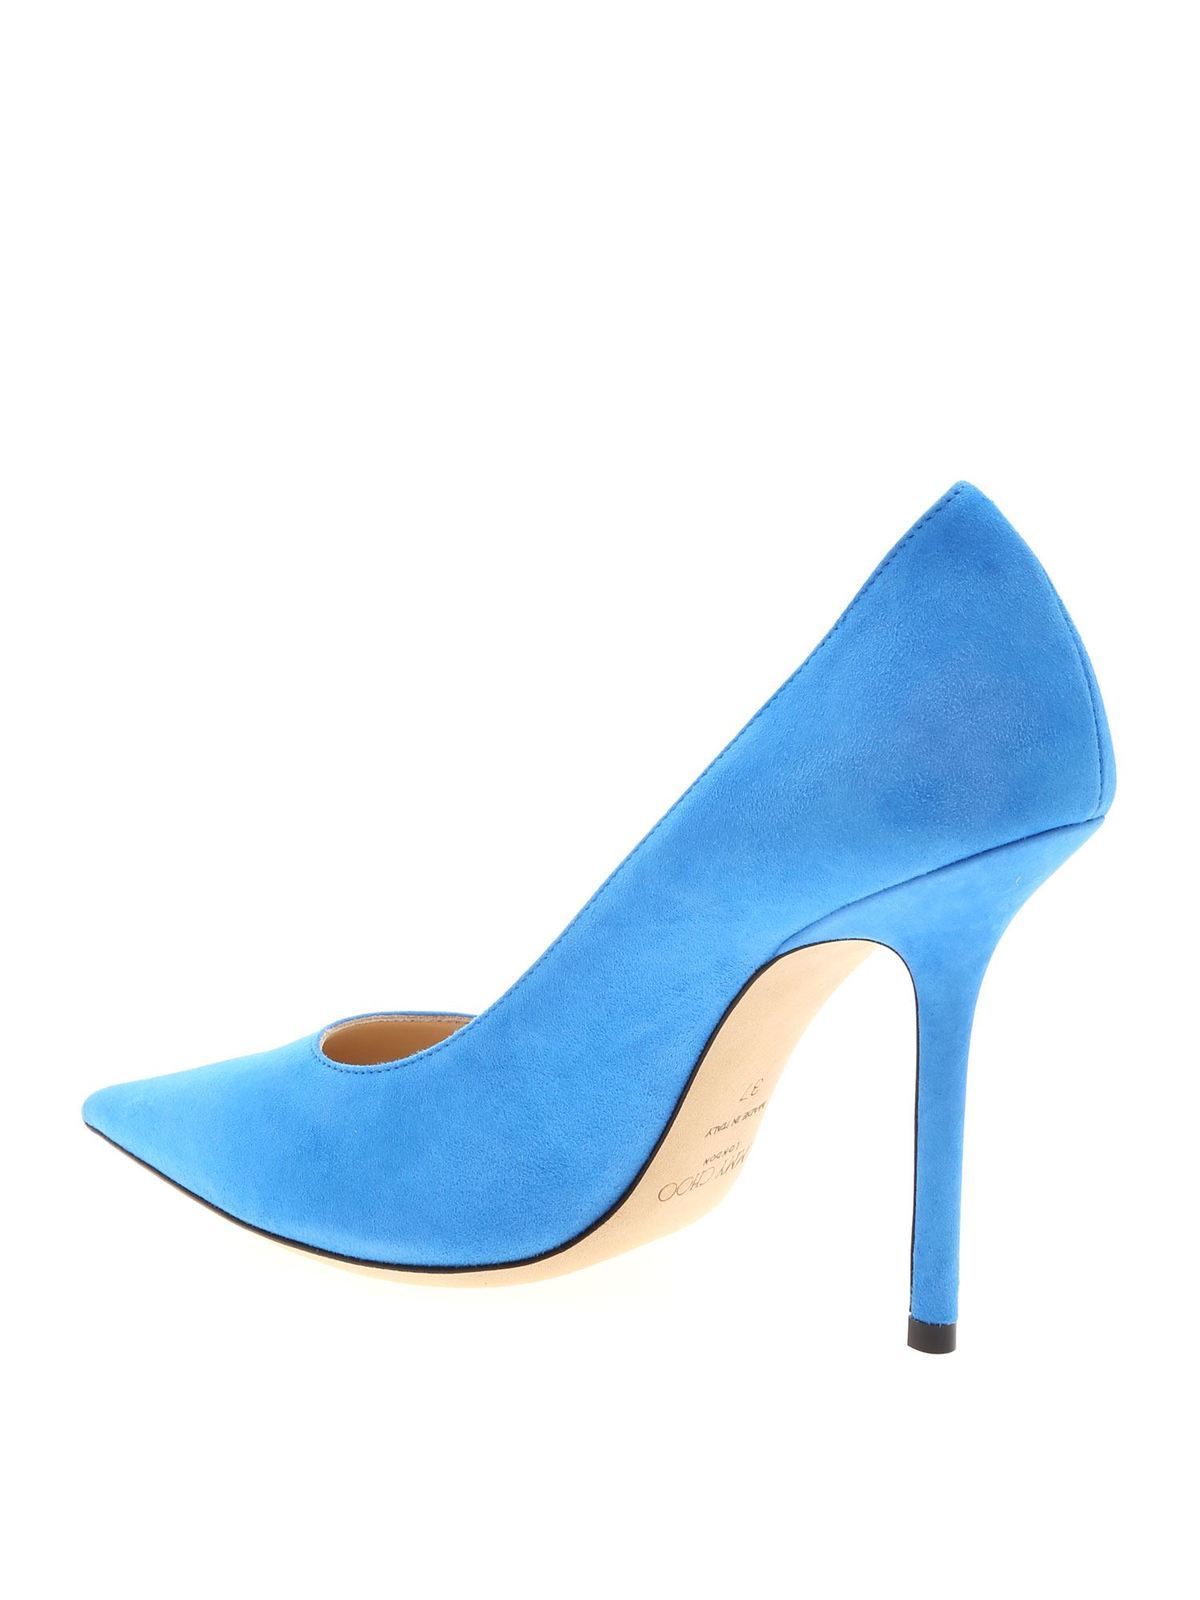 jimmy choo light blue shoes